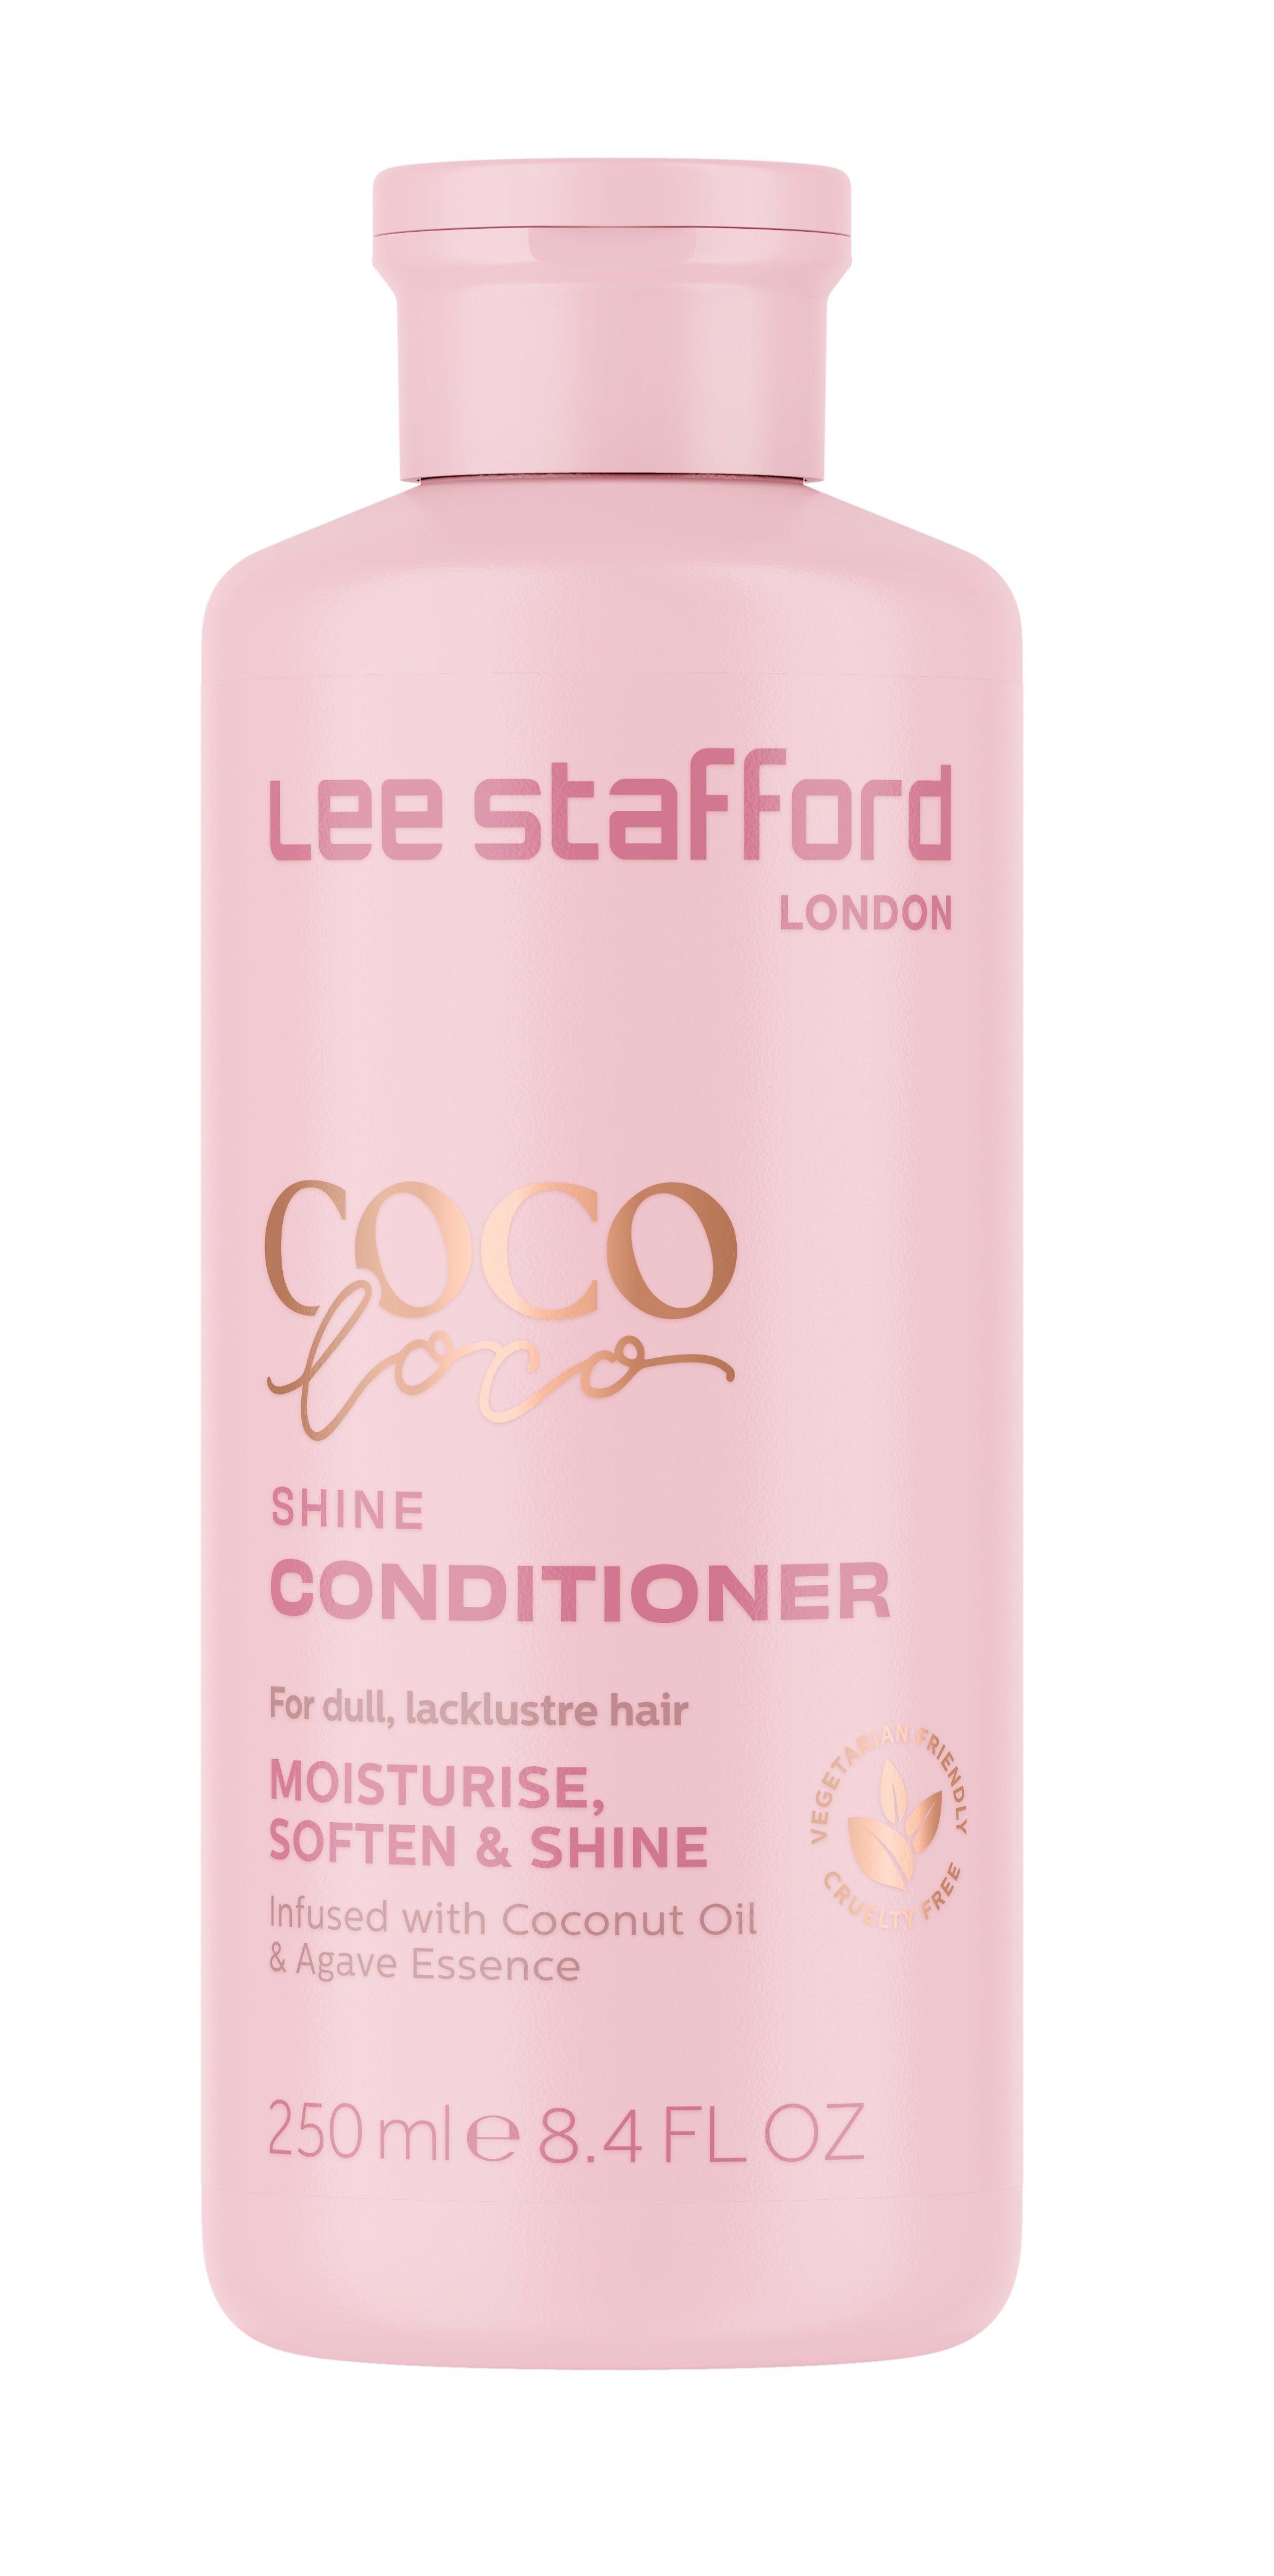 Lee Stafford - Coco Loco Shine Conditioner 250 ml - Skjønnhet